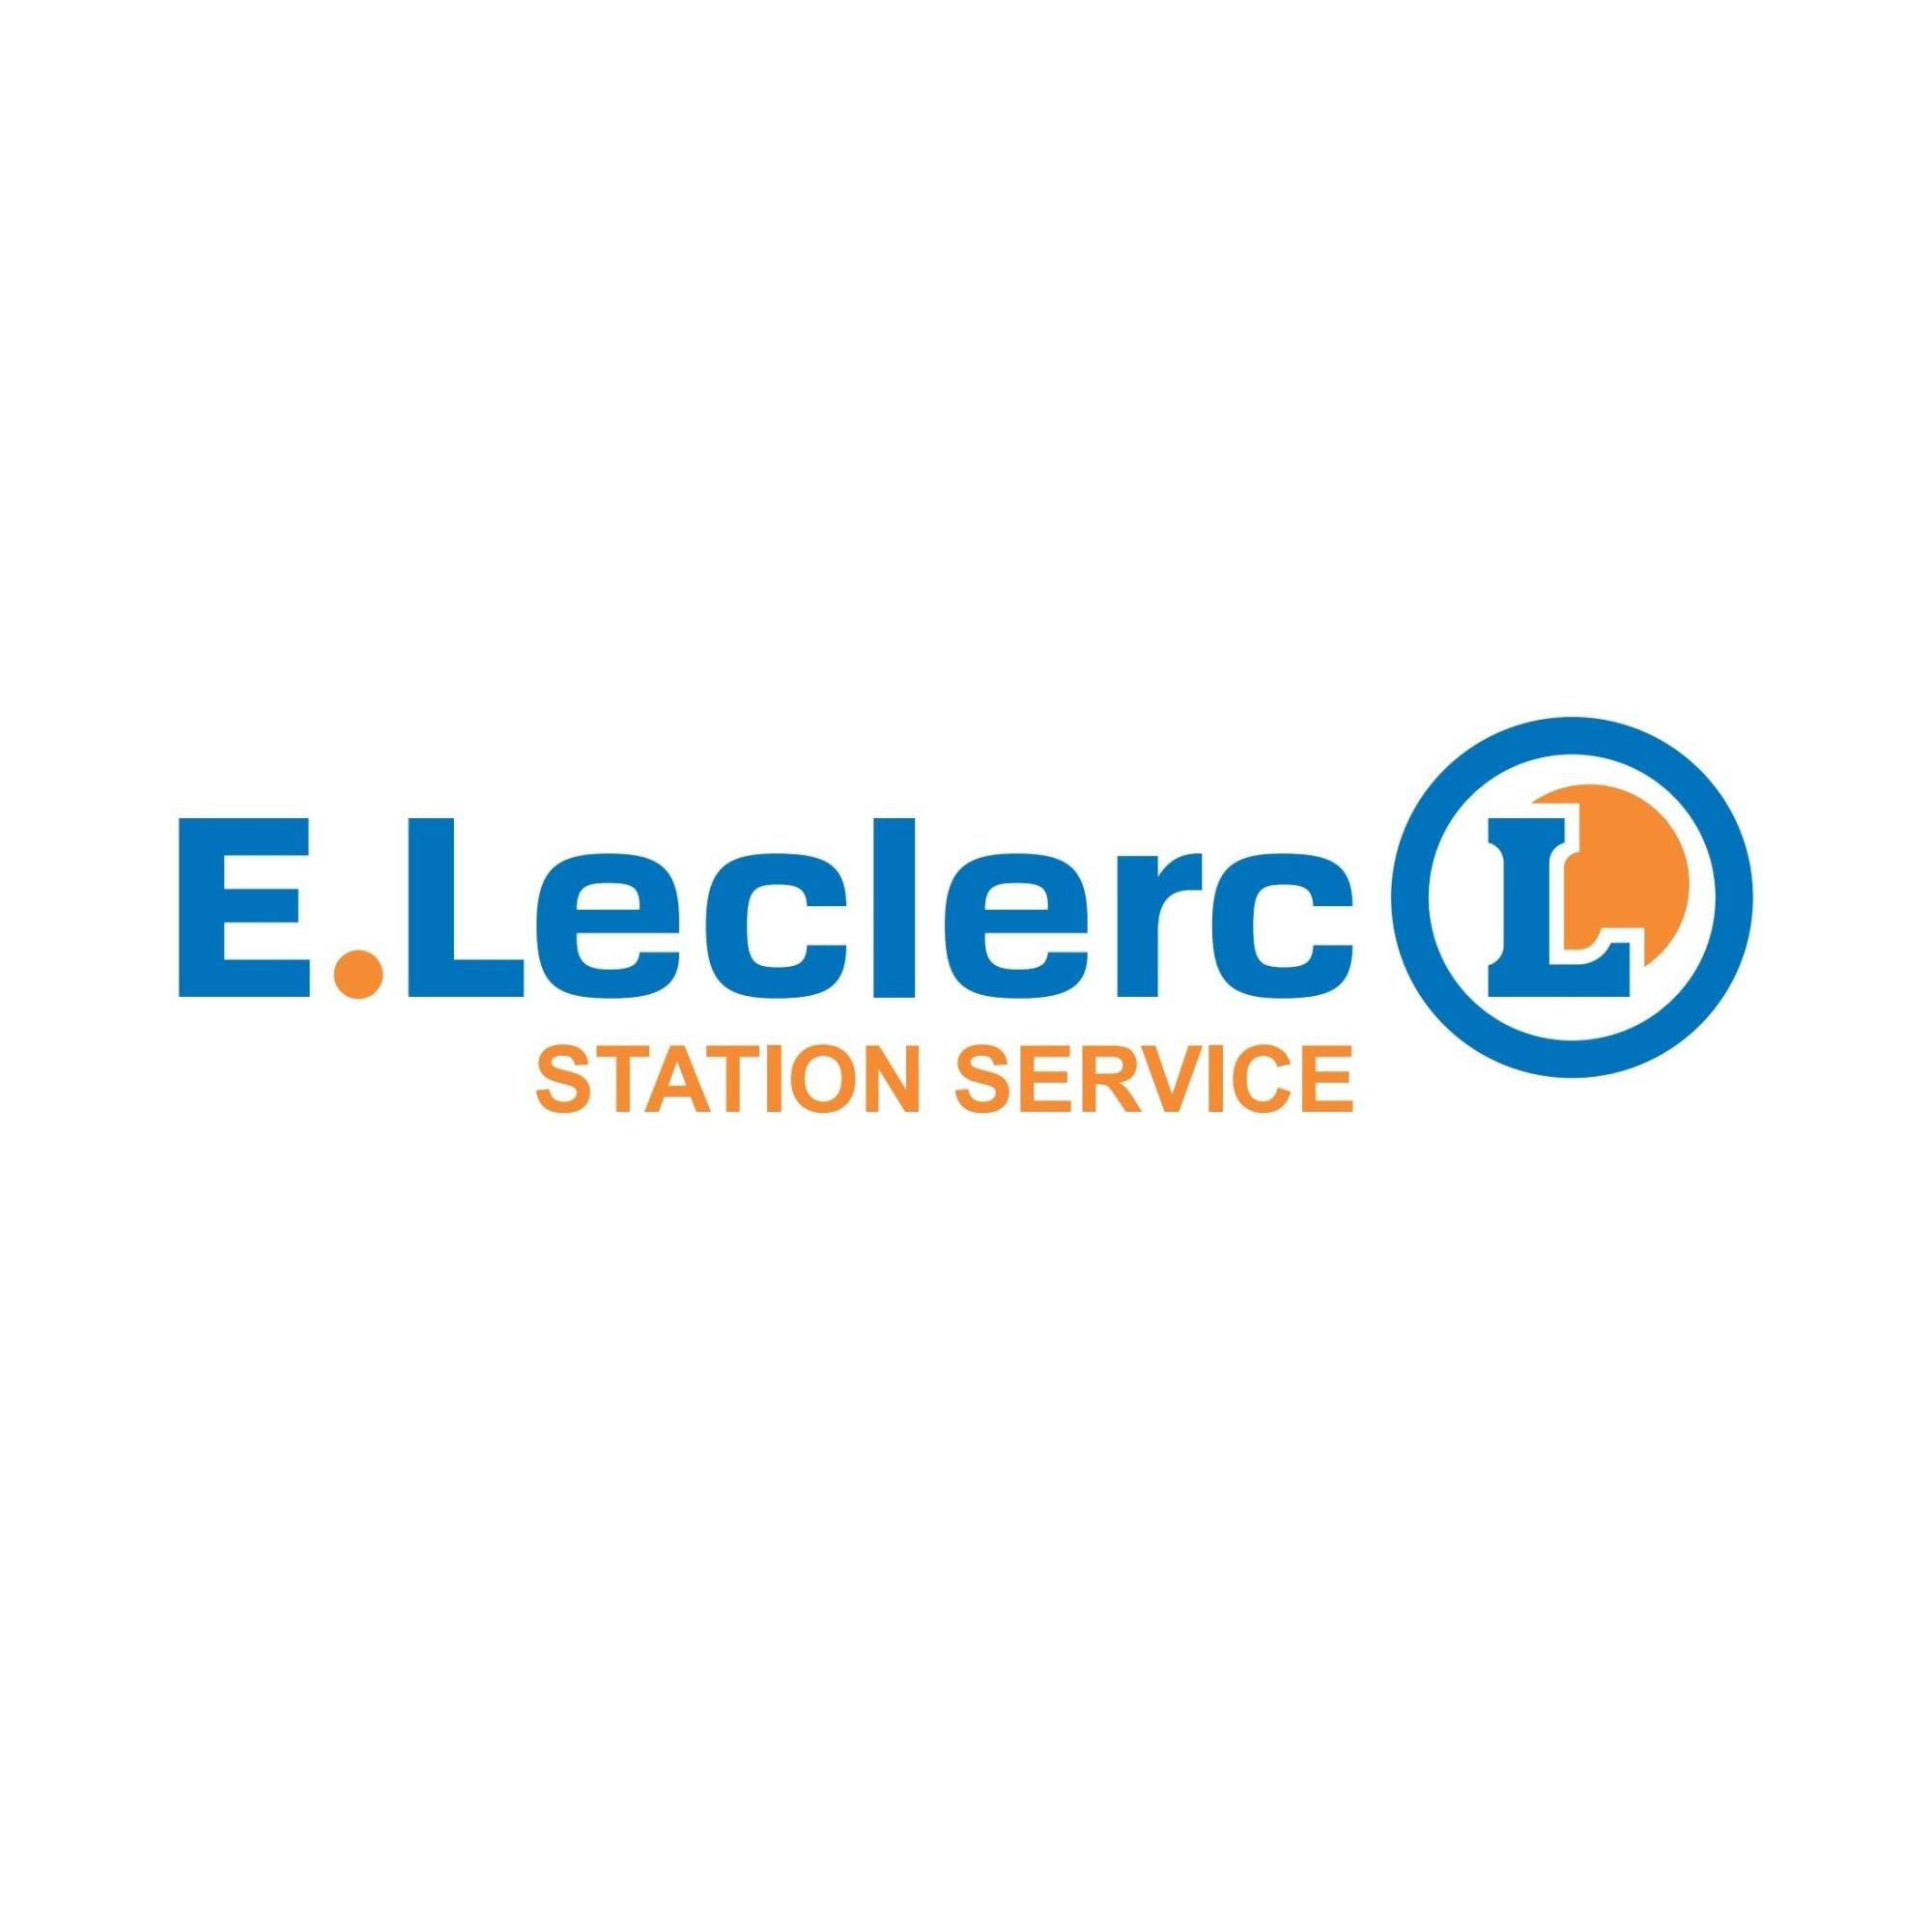 E.leclerc Station Service Dole Dole